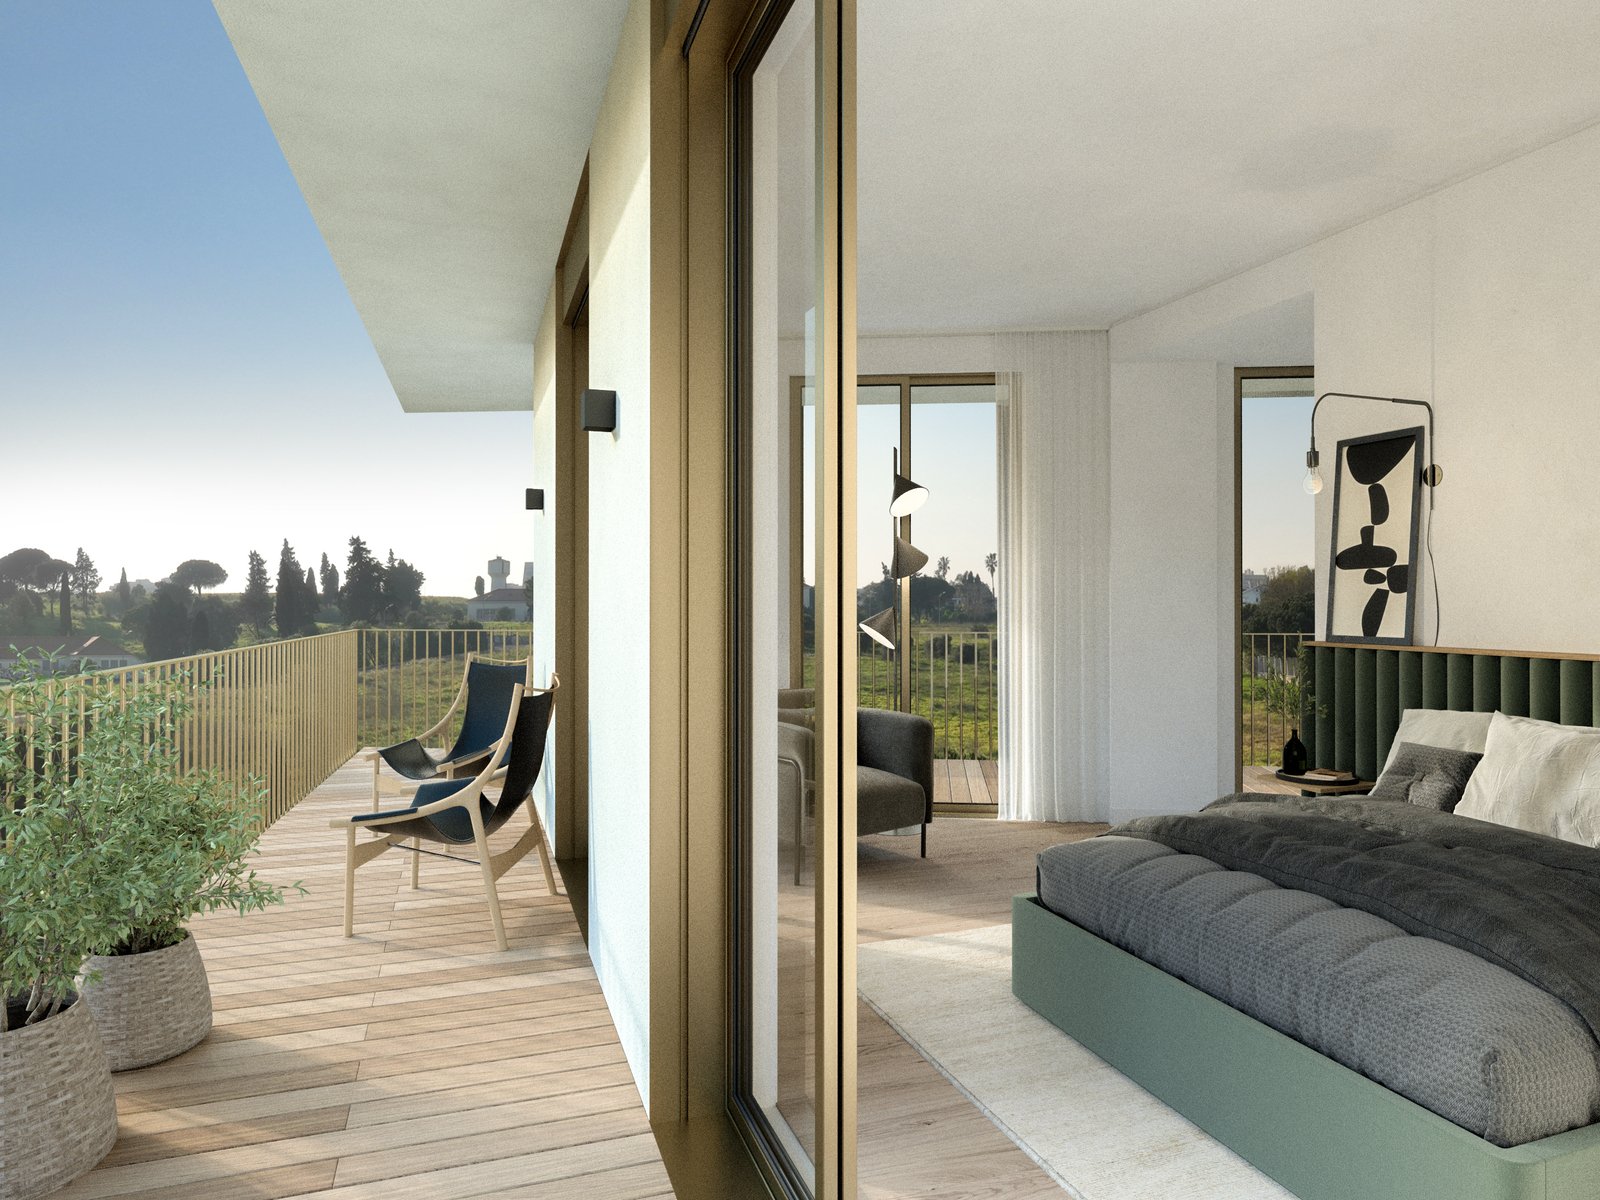 2 bedroom apartment with balcony in new development in Miraflores 209061140